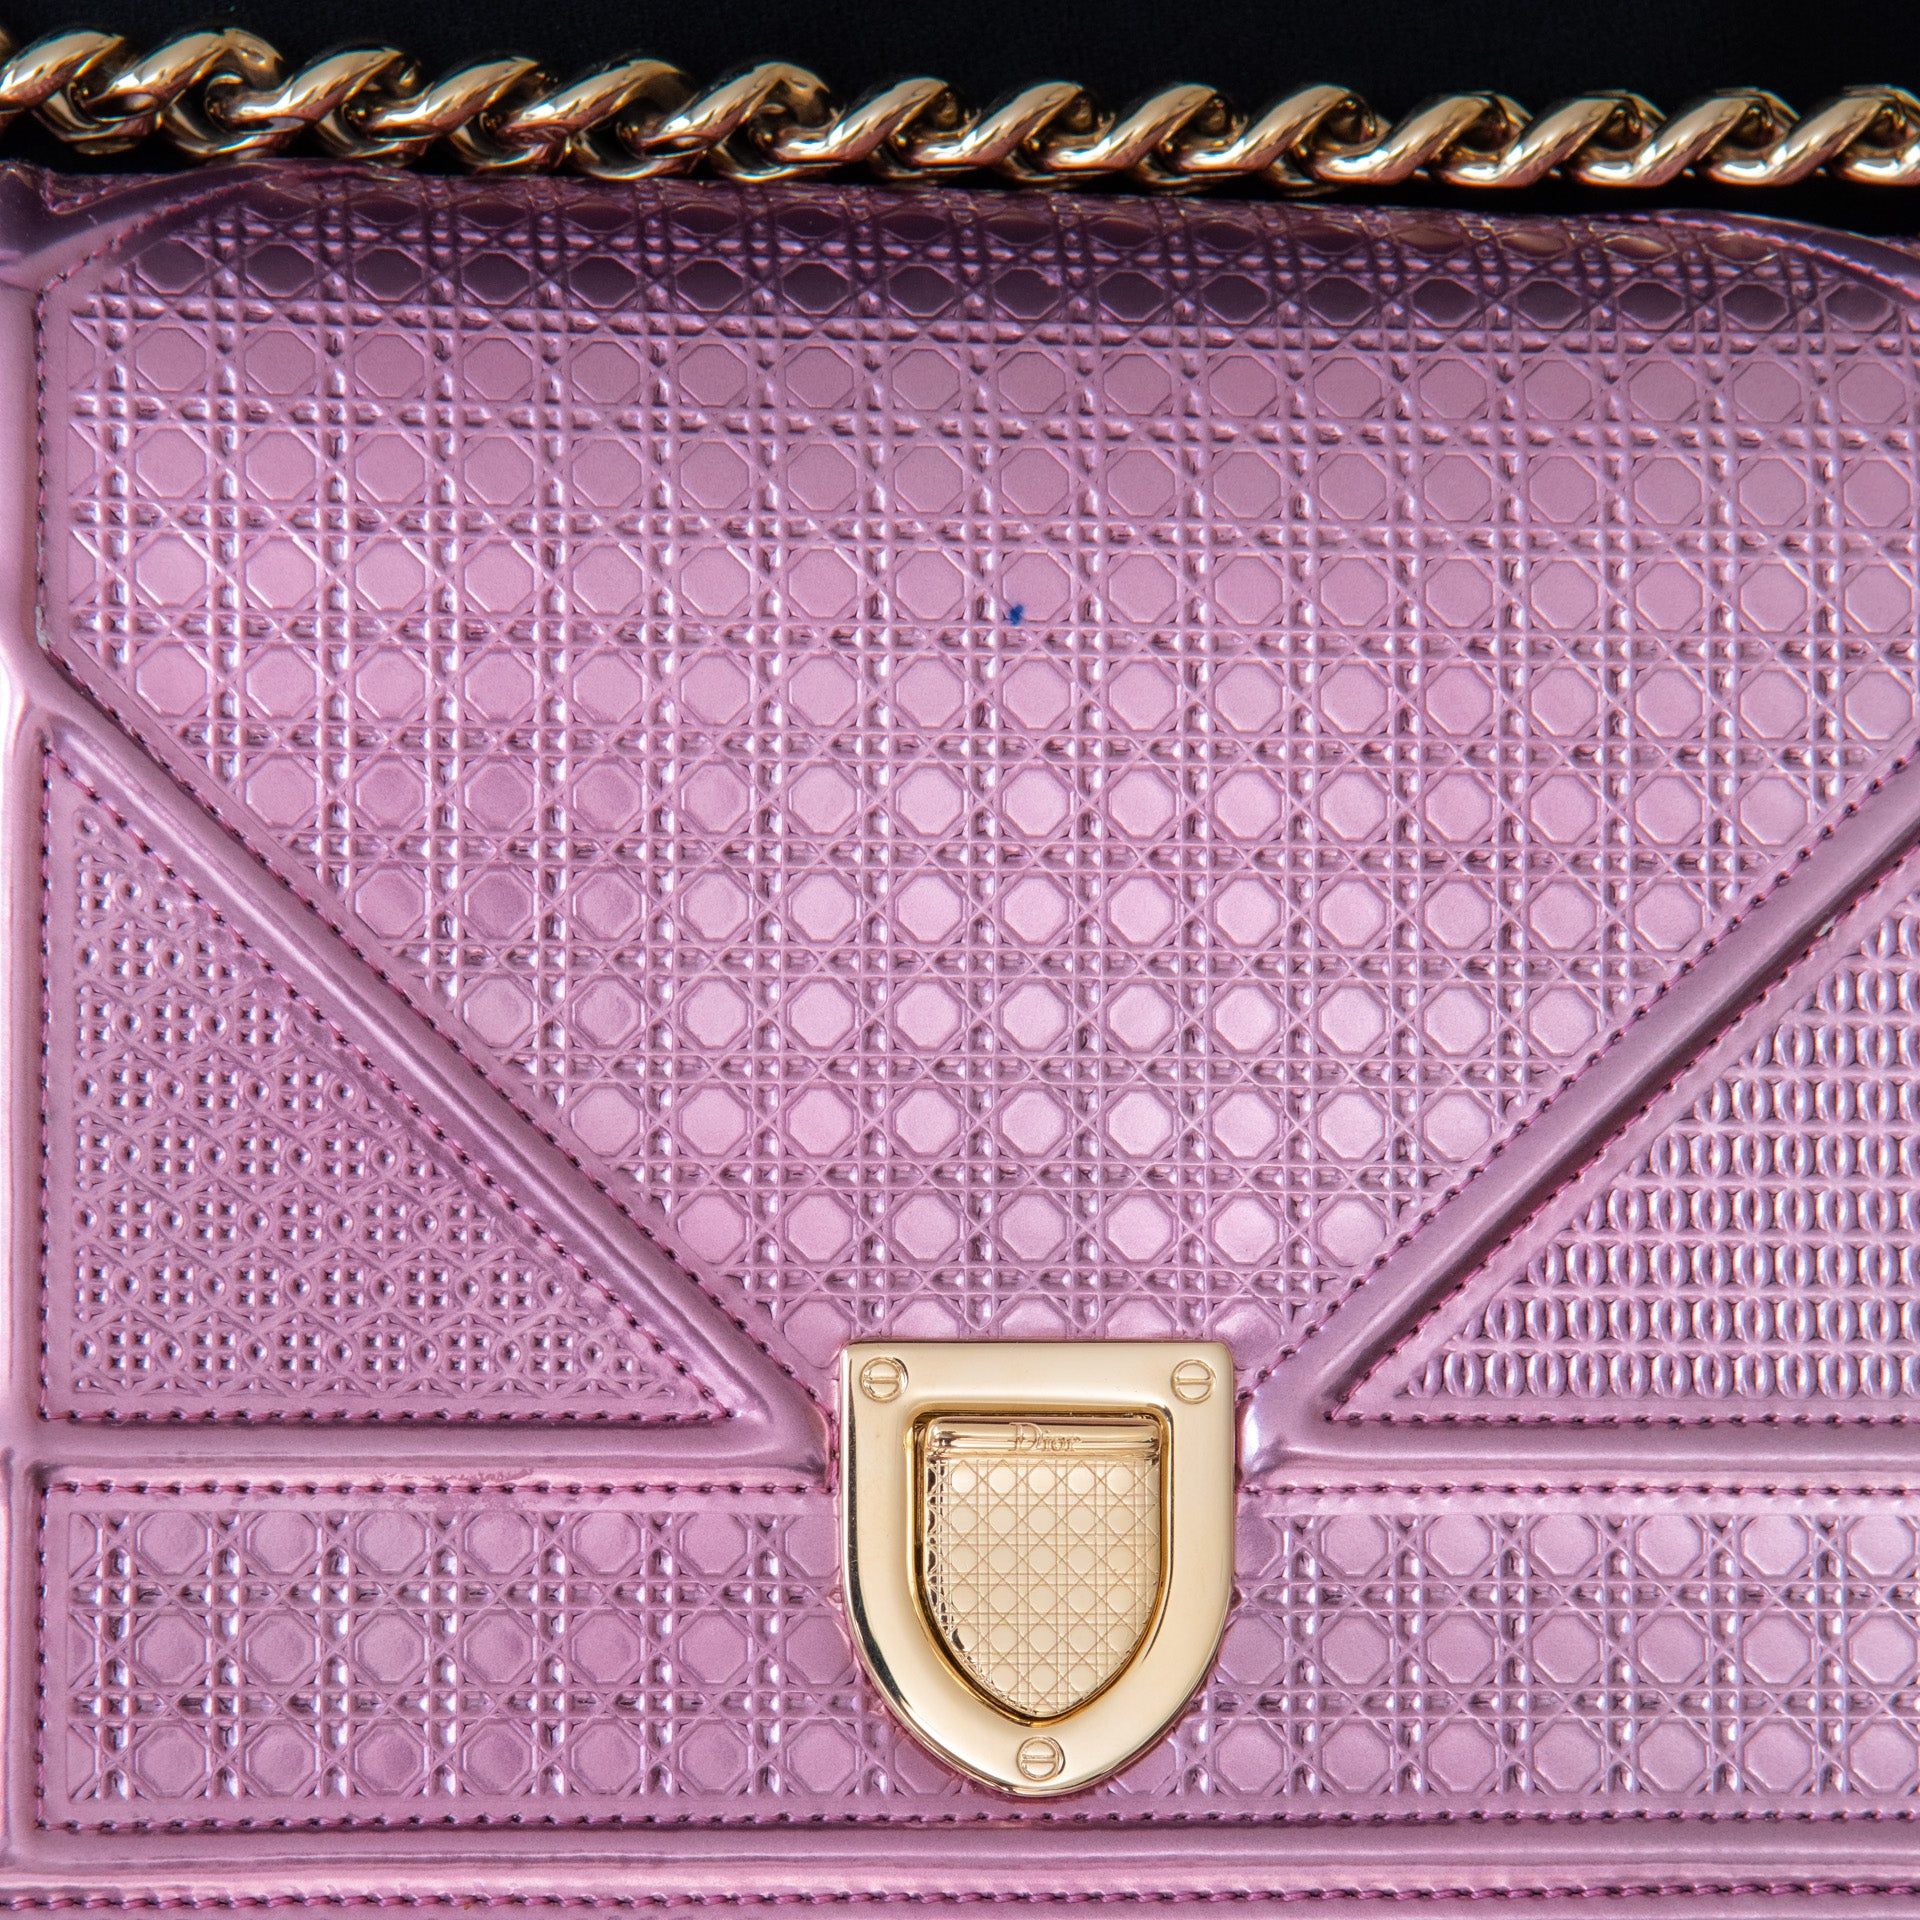 Dior Diorama Metallic Pink Bag - Image 3 of 8